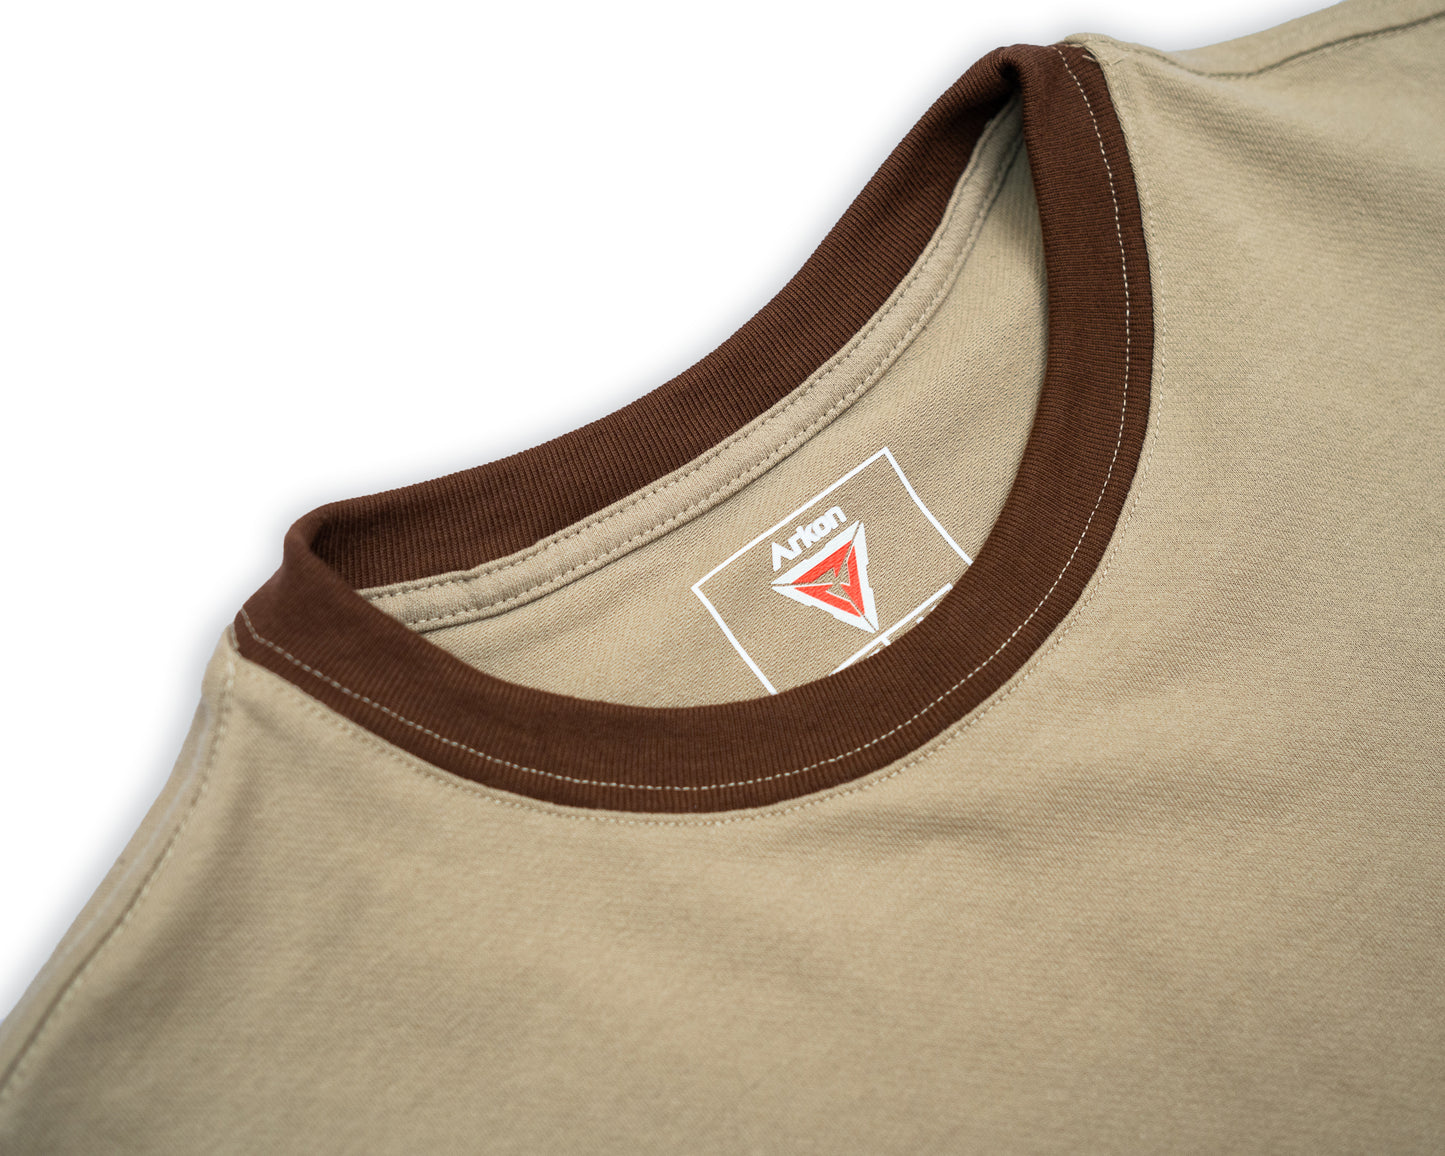 Arkon Heavy Premium Cotton Oversize Crewneck Shirt - Taupe